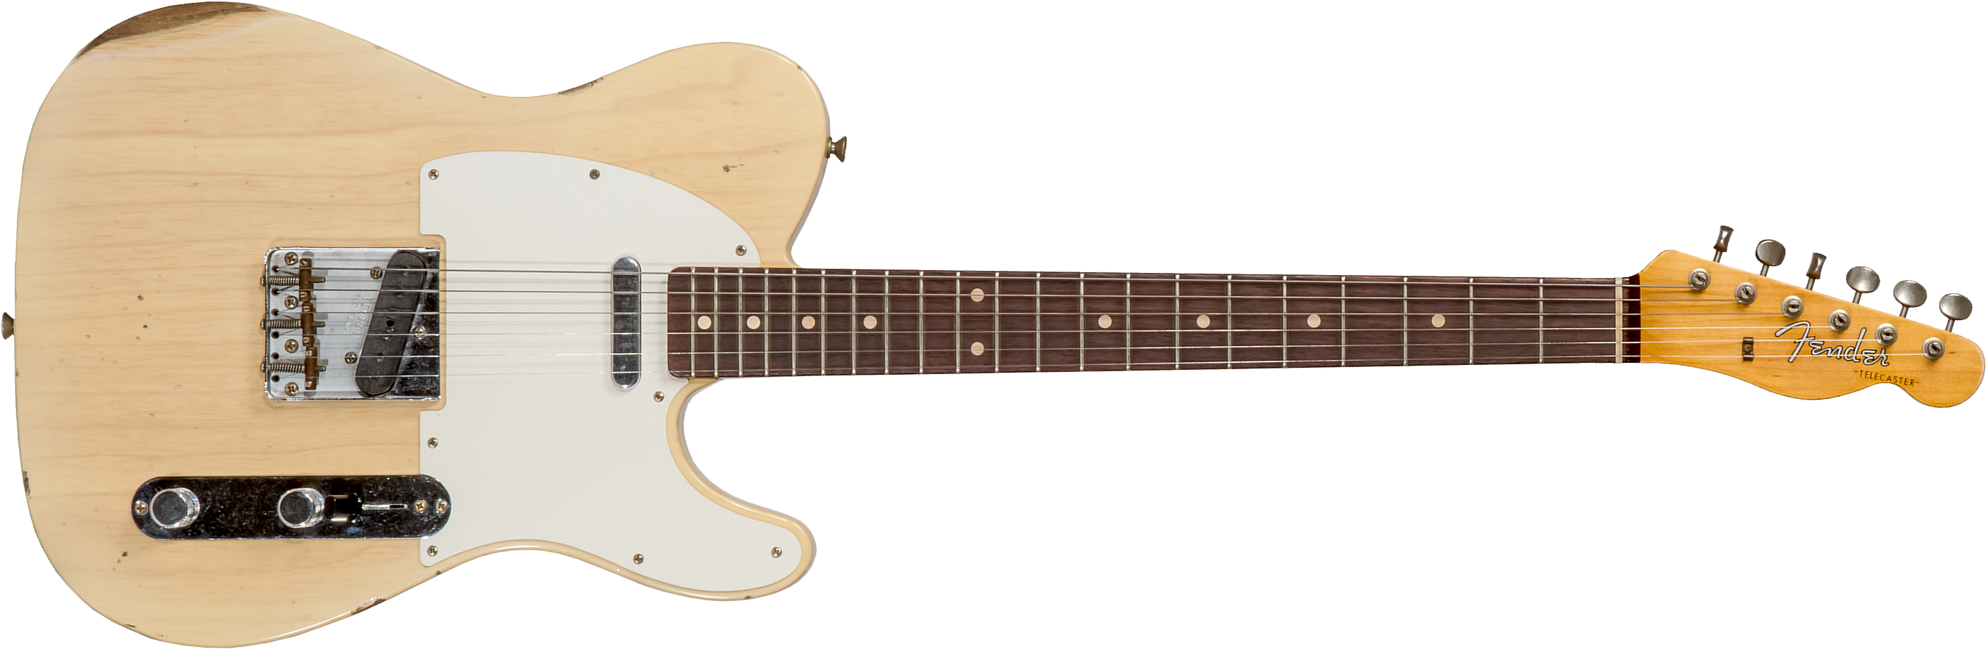 Fender Custom Shop Tele 1960 2s Ht Rw #cz569492 - Relic Natural Blonde - Tel shape electric guitar - Main picture